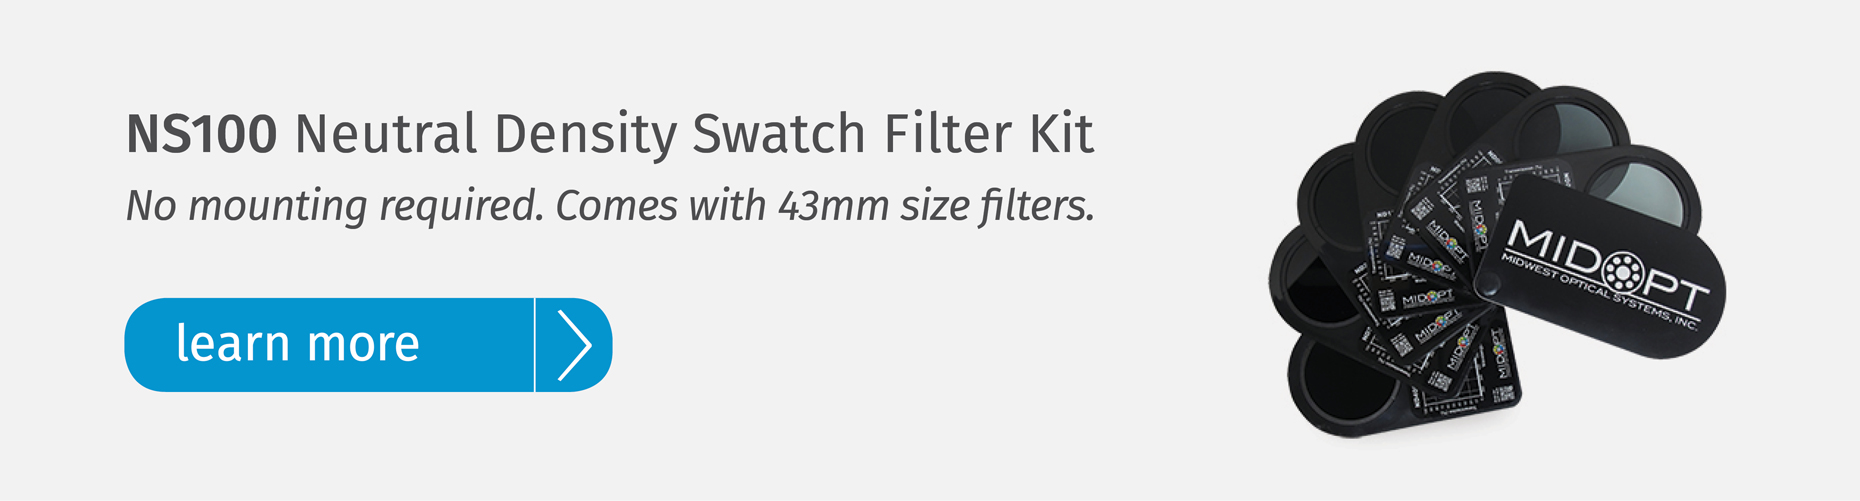 MidOpt NS100 Neutral Density Swatch Filter Test Kit